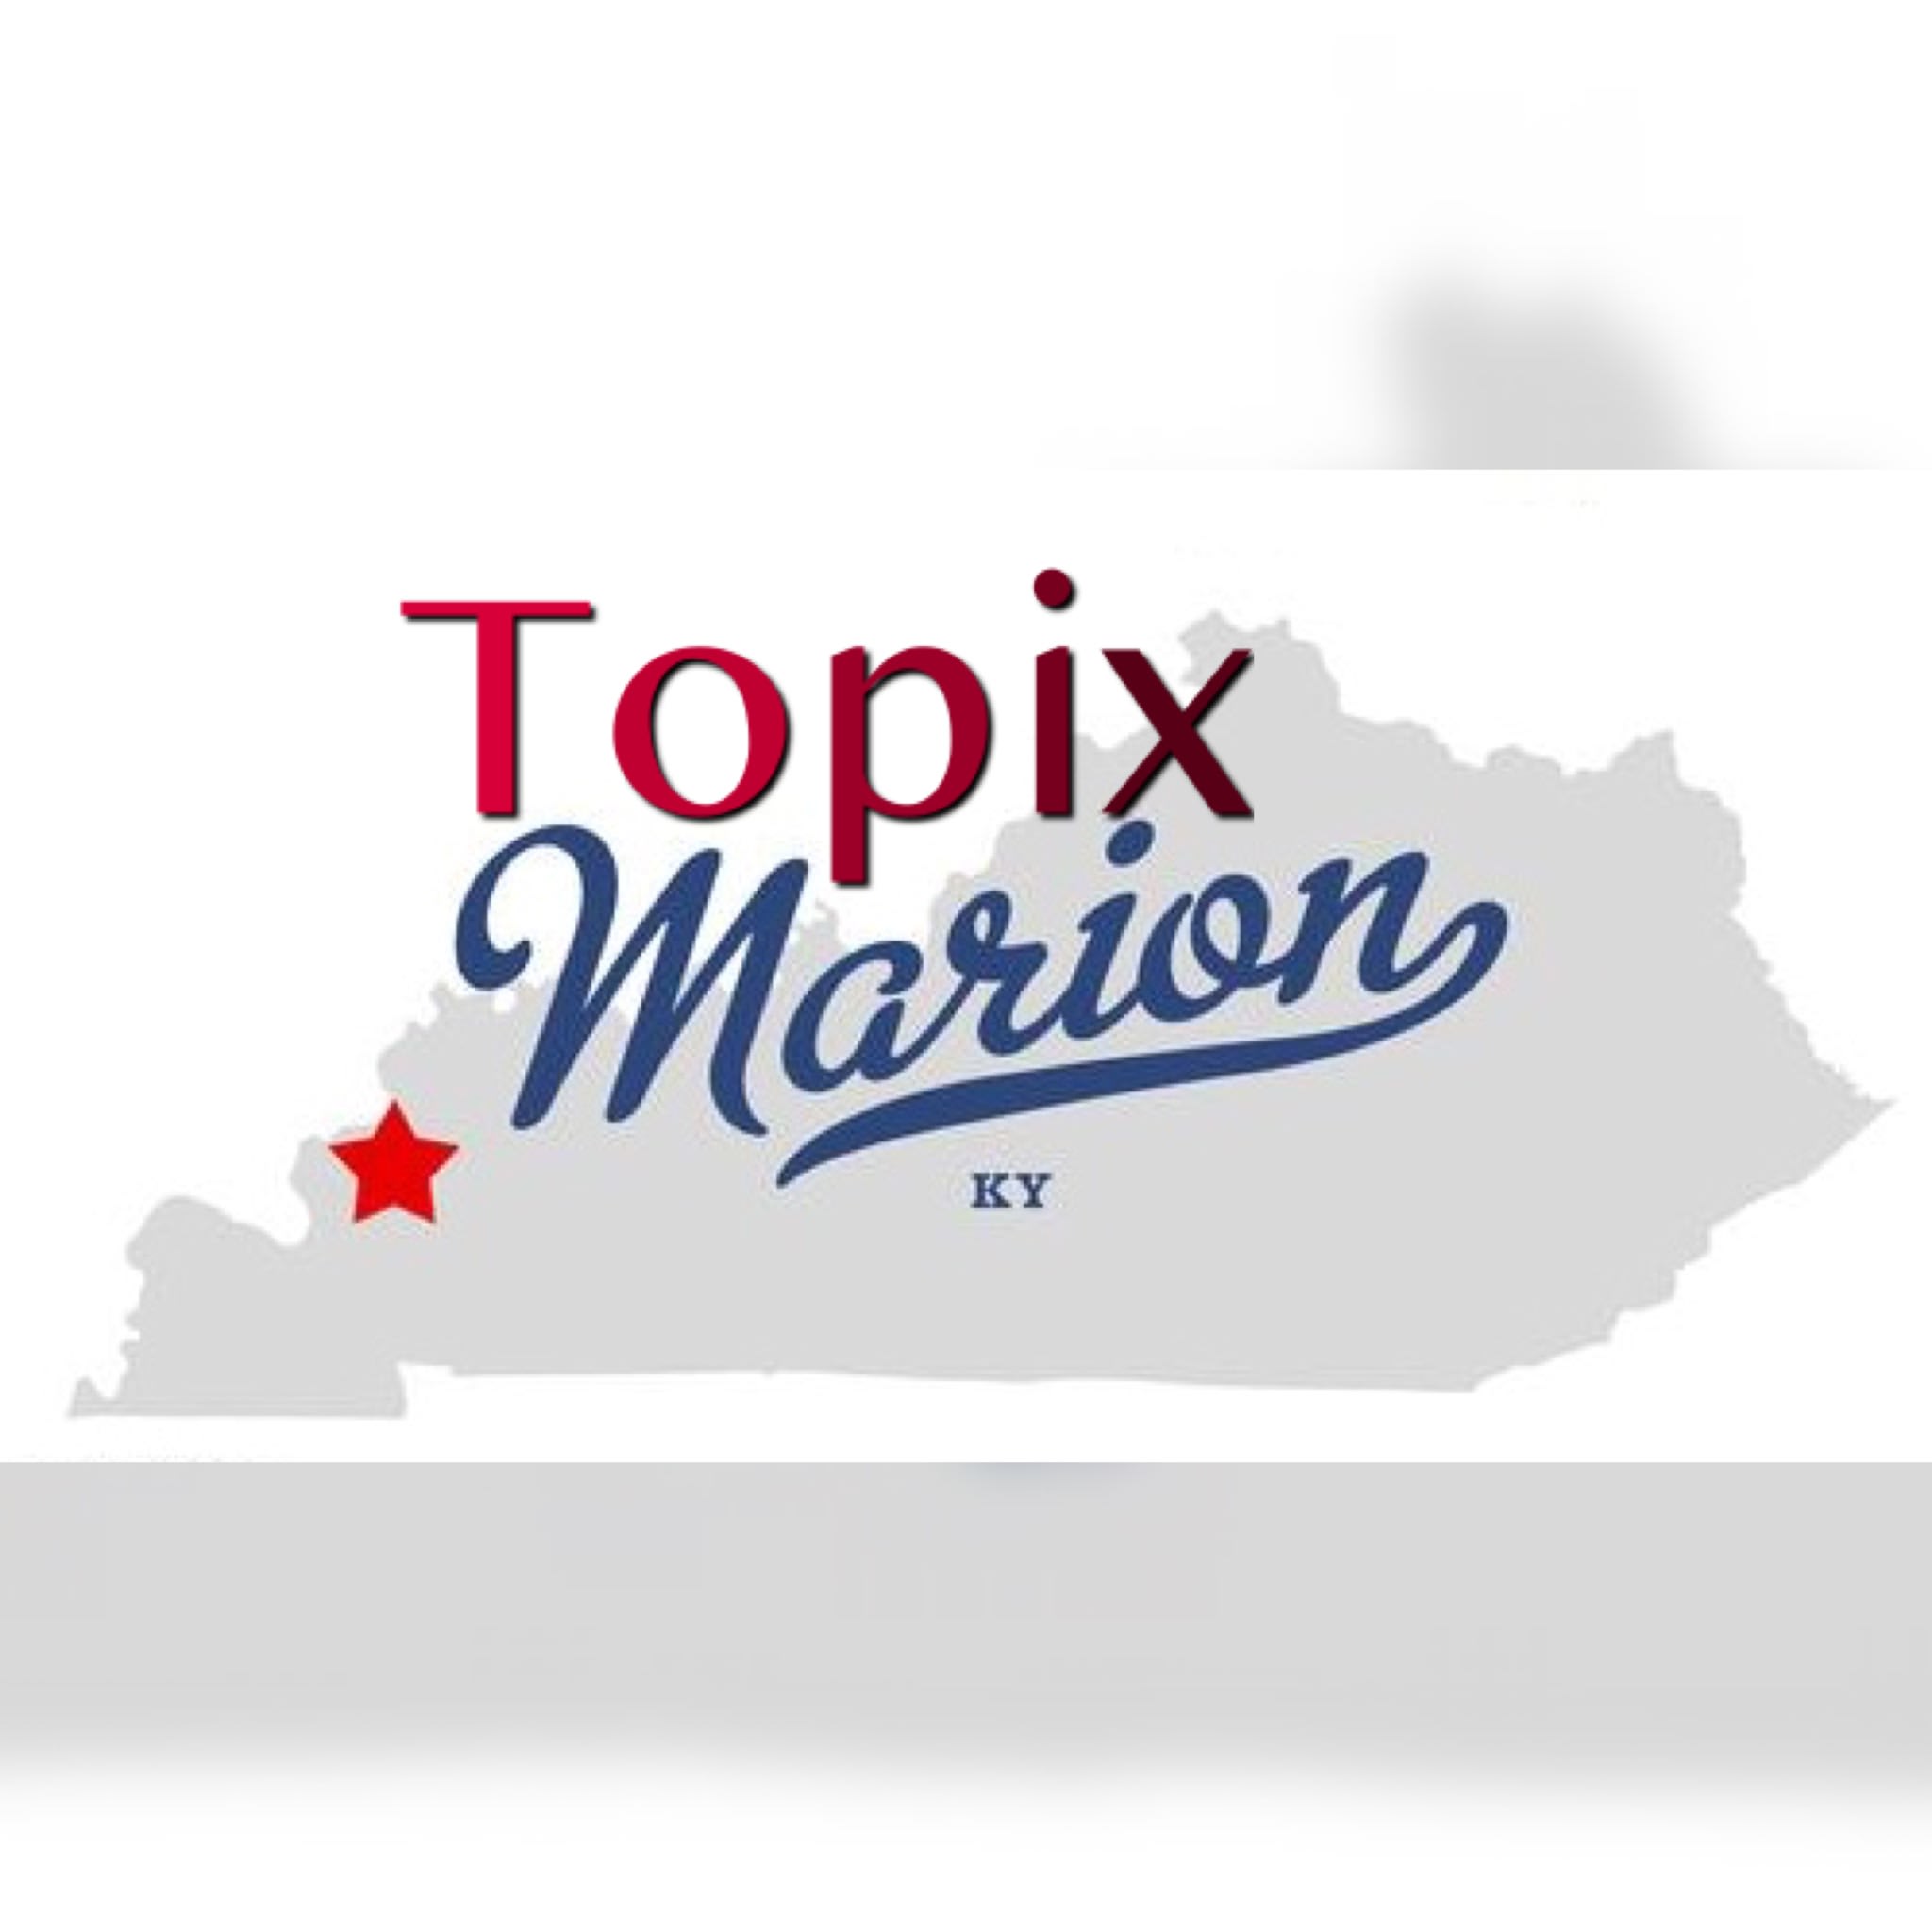 Topix Marion, KY